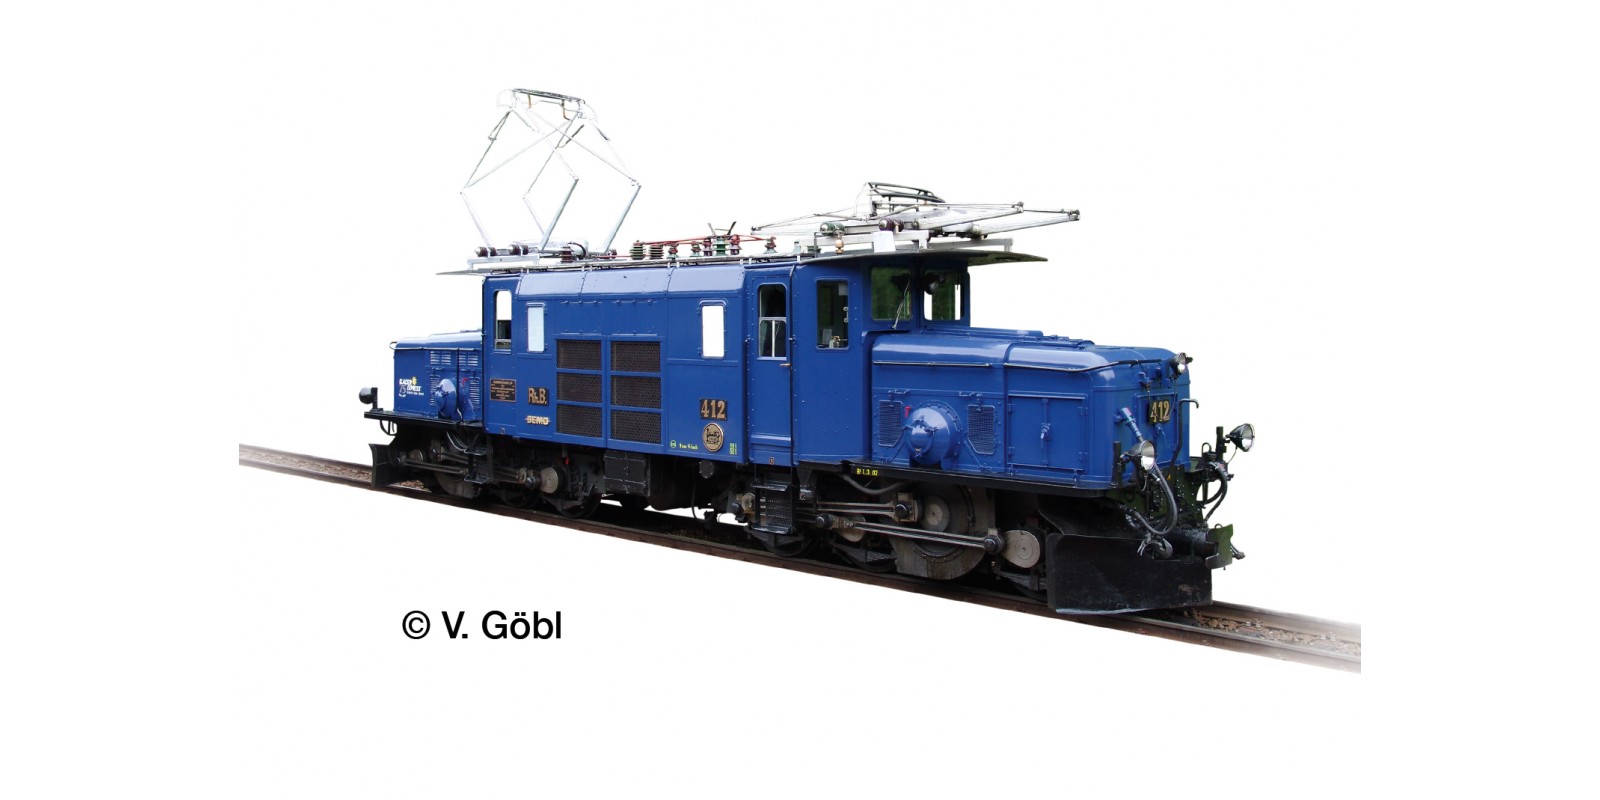 L26602 Class Ge 6/6 I Electric Locomotive